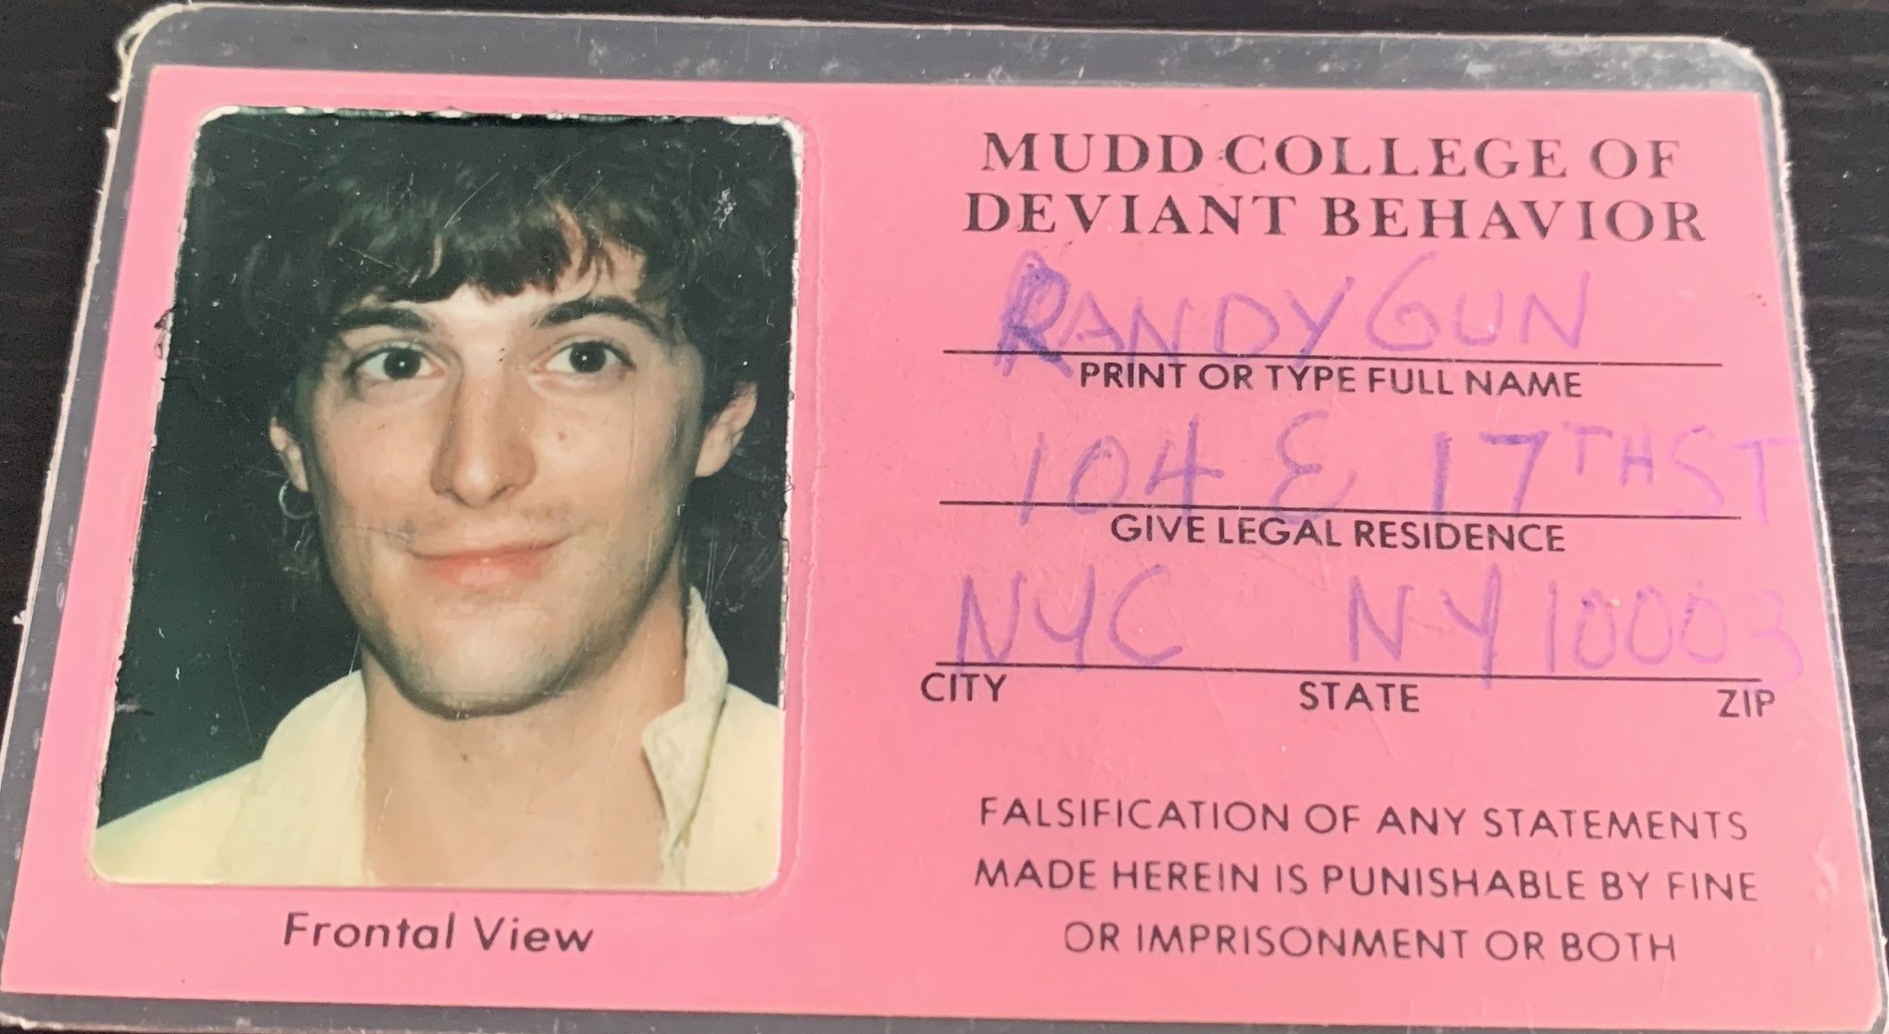 Randy Gun Mudd College of Deviant Behavior ID